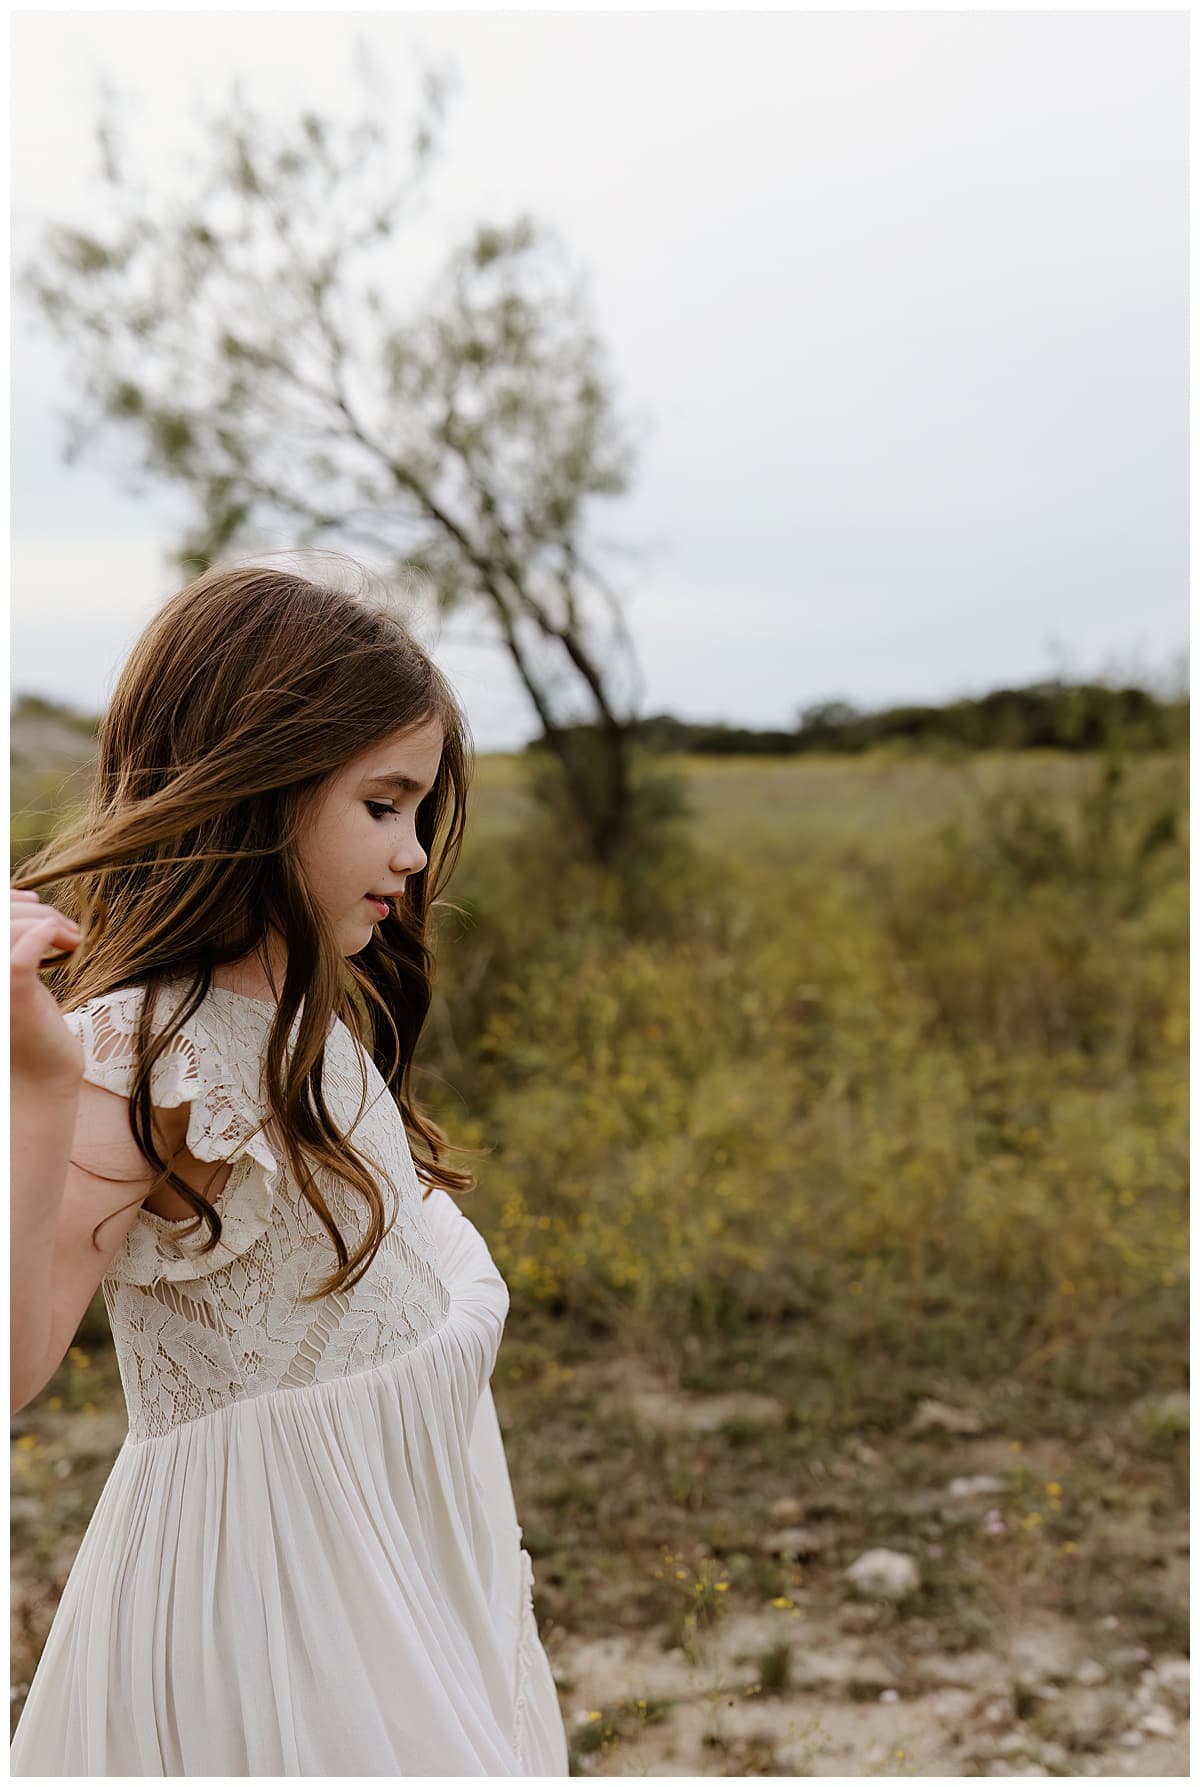 Young girl walks through grass for Austin Lifestyle Photographer